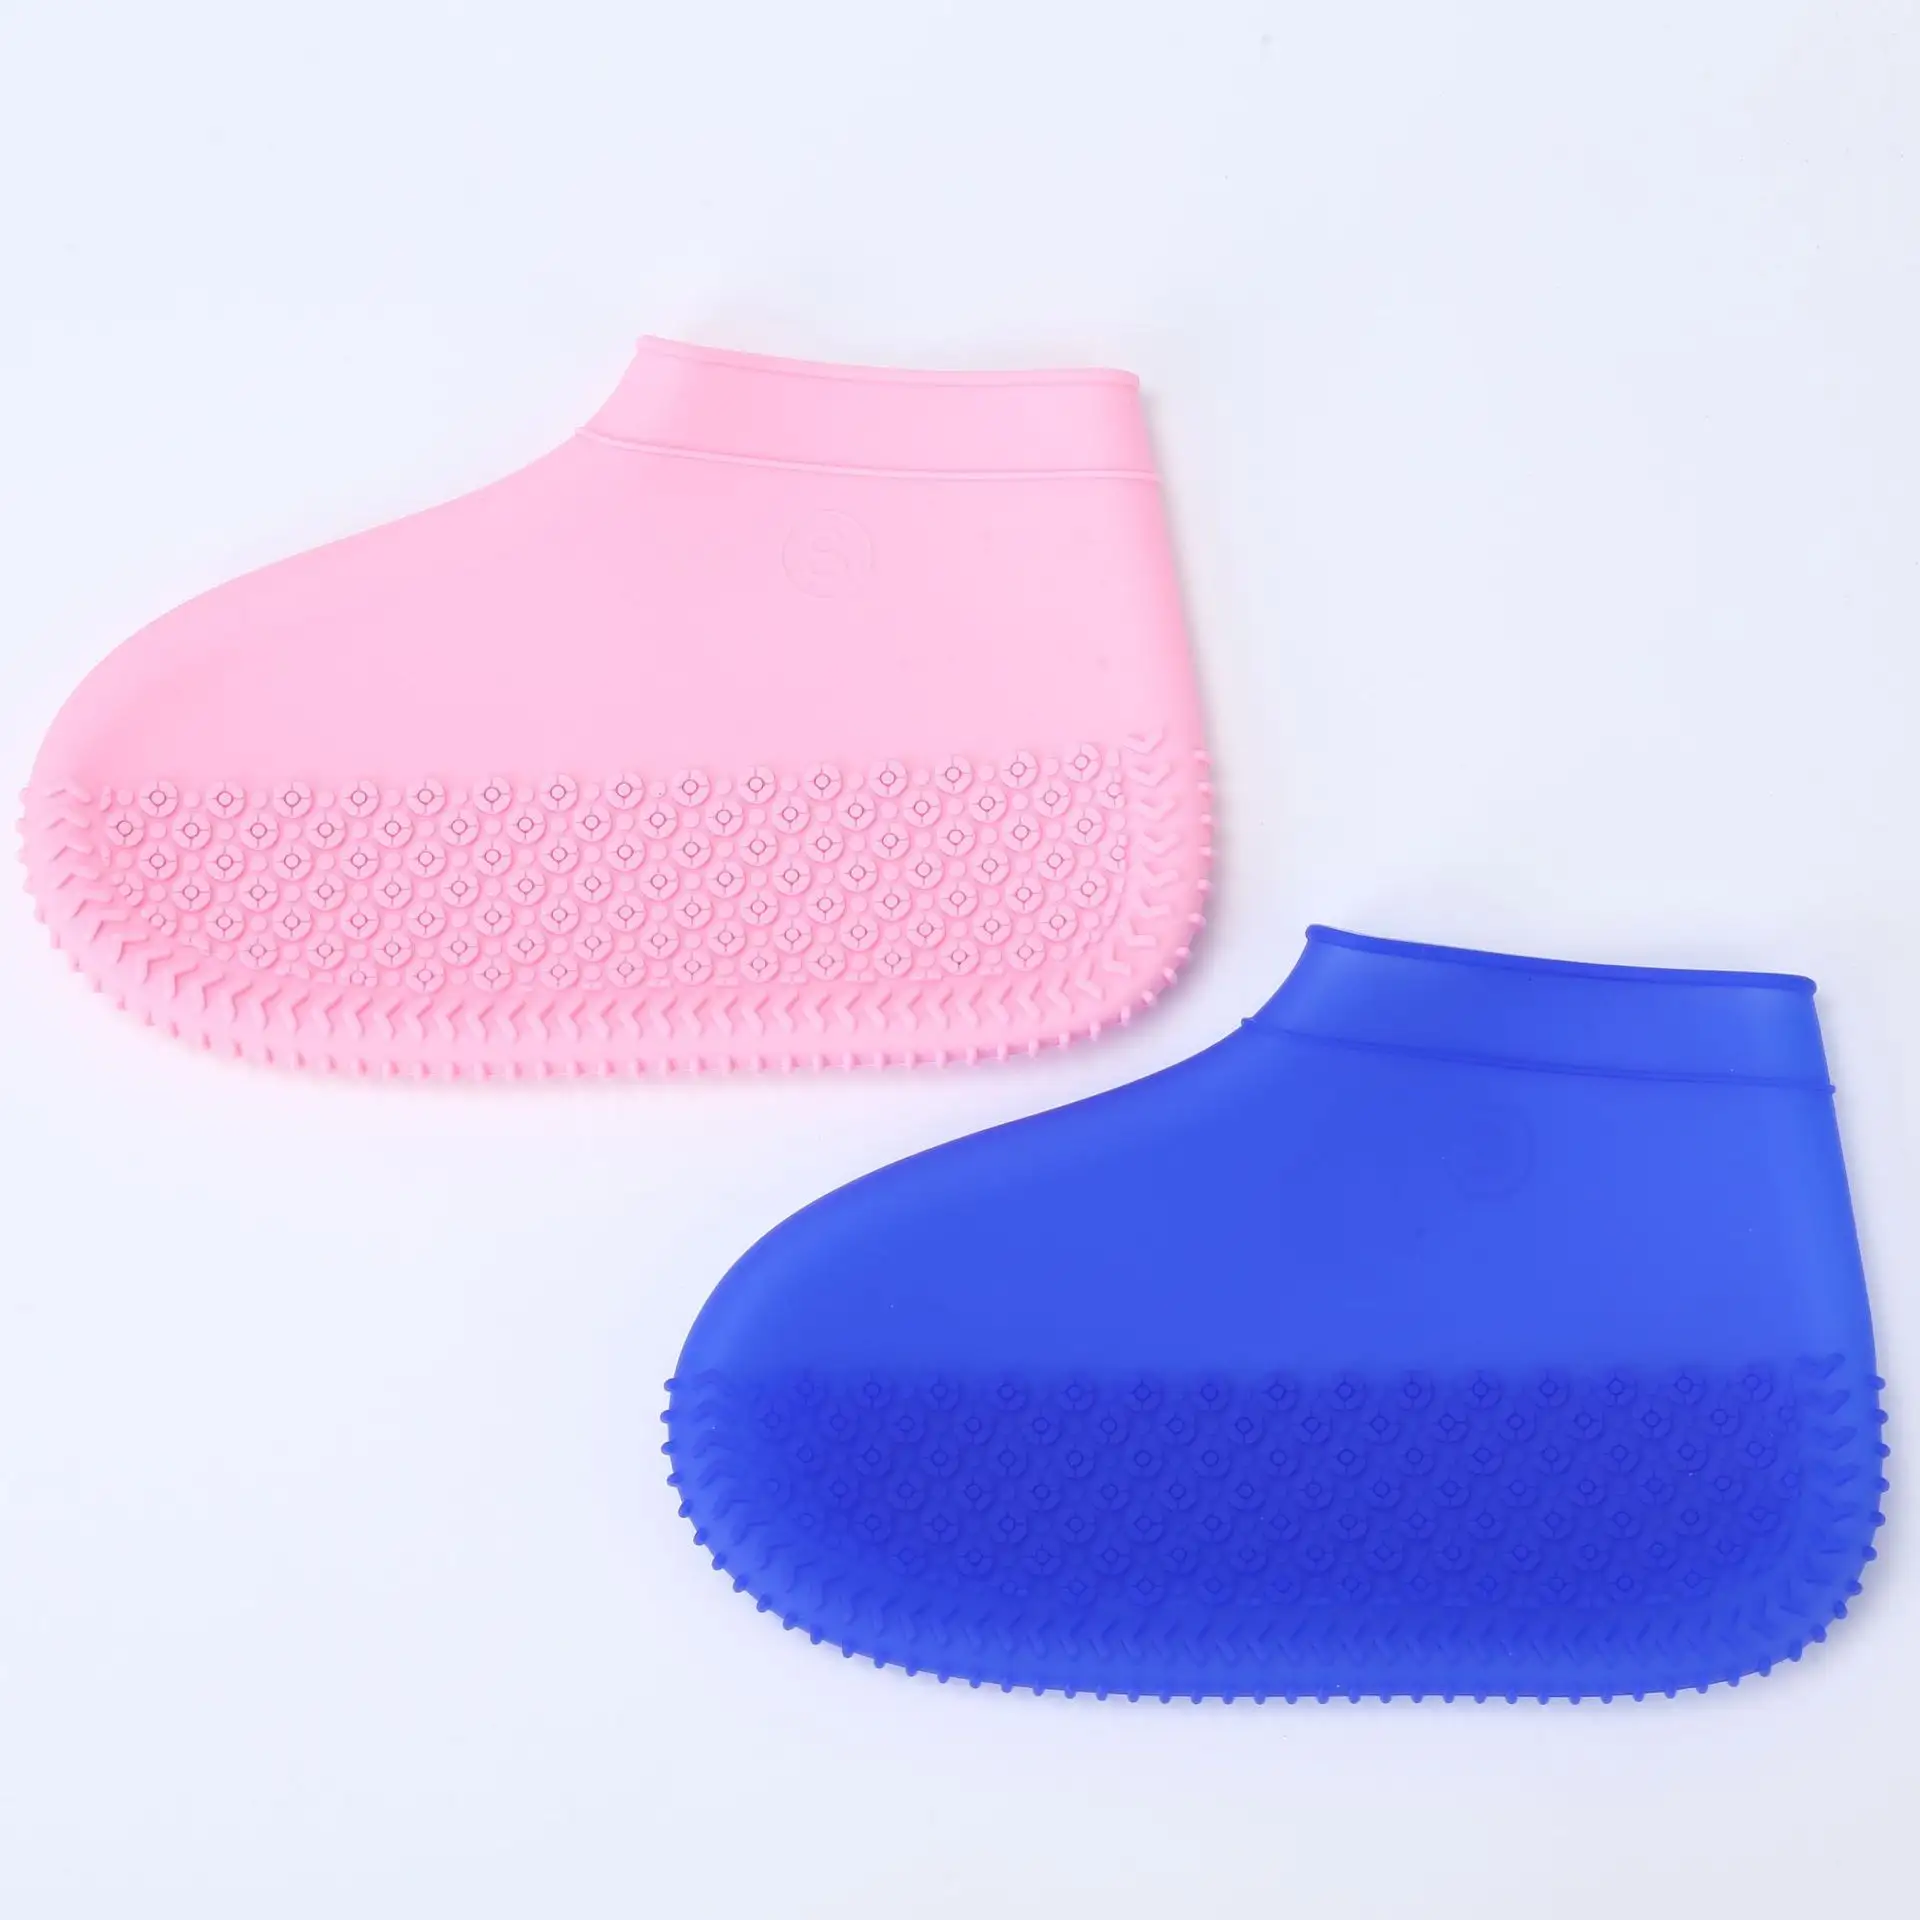 Zapatos de silicona antideslizantes impermeables personalizados, cubierta protectora para zapatos de lluvia, cubiertas de silicona para zapatos